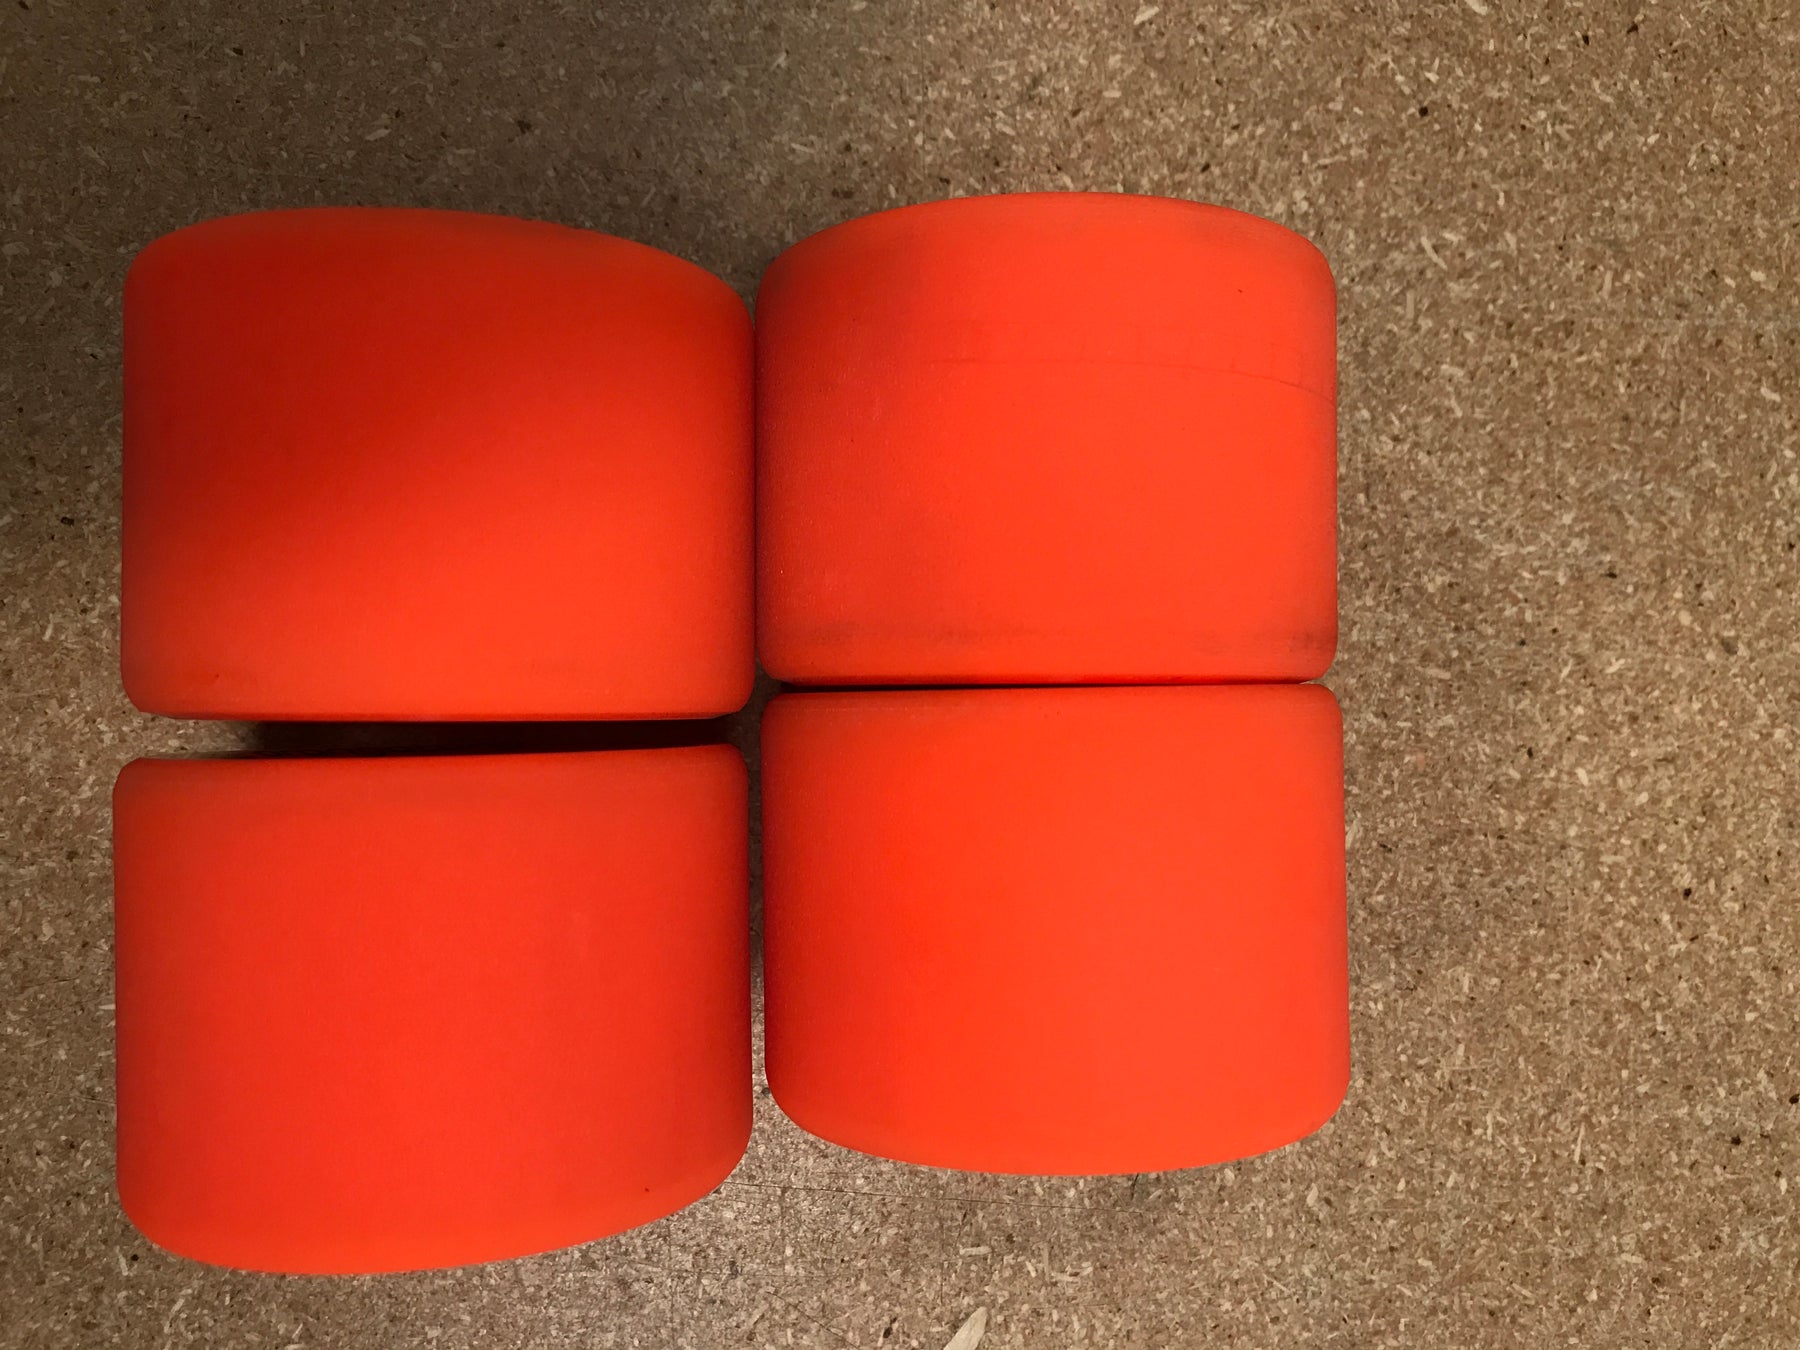 Orangatang Stimulus, Orange, 70mm/80a Longboard Wheels - Lightly Used